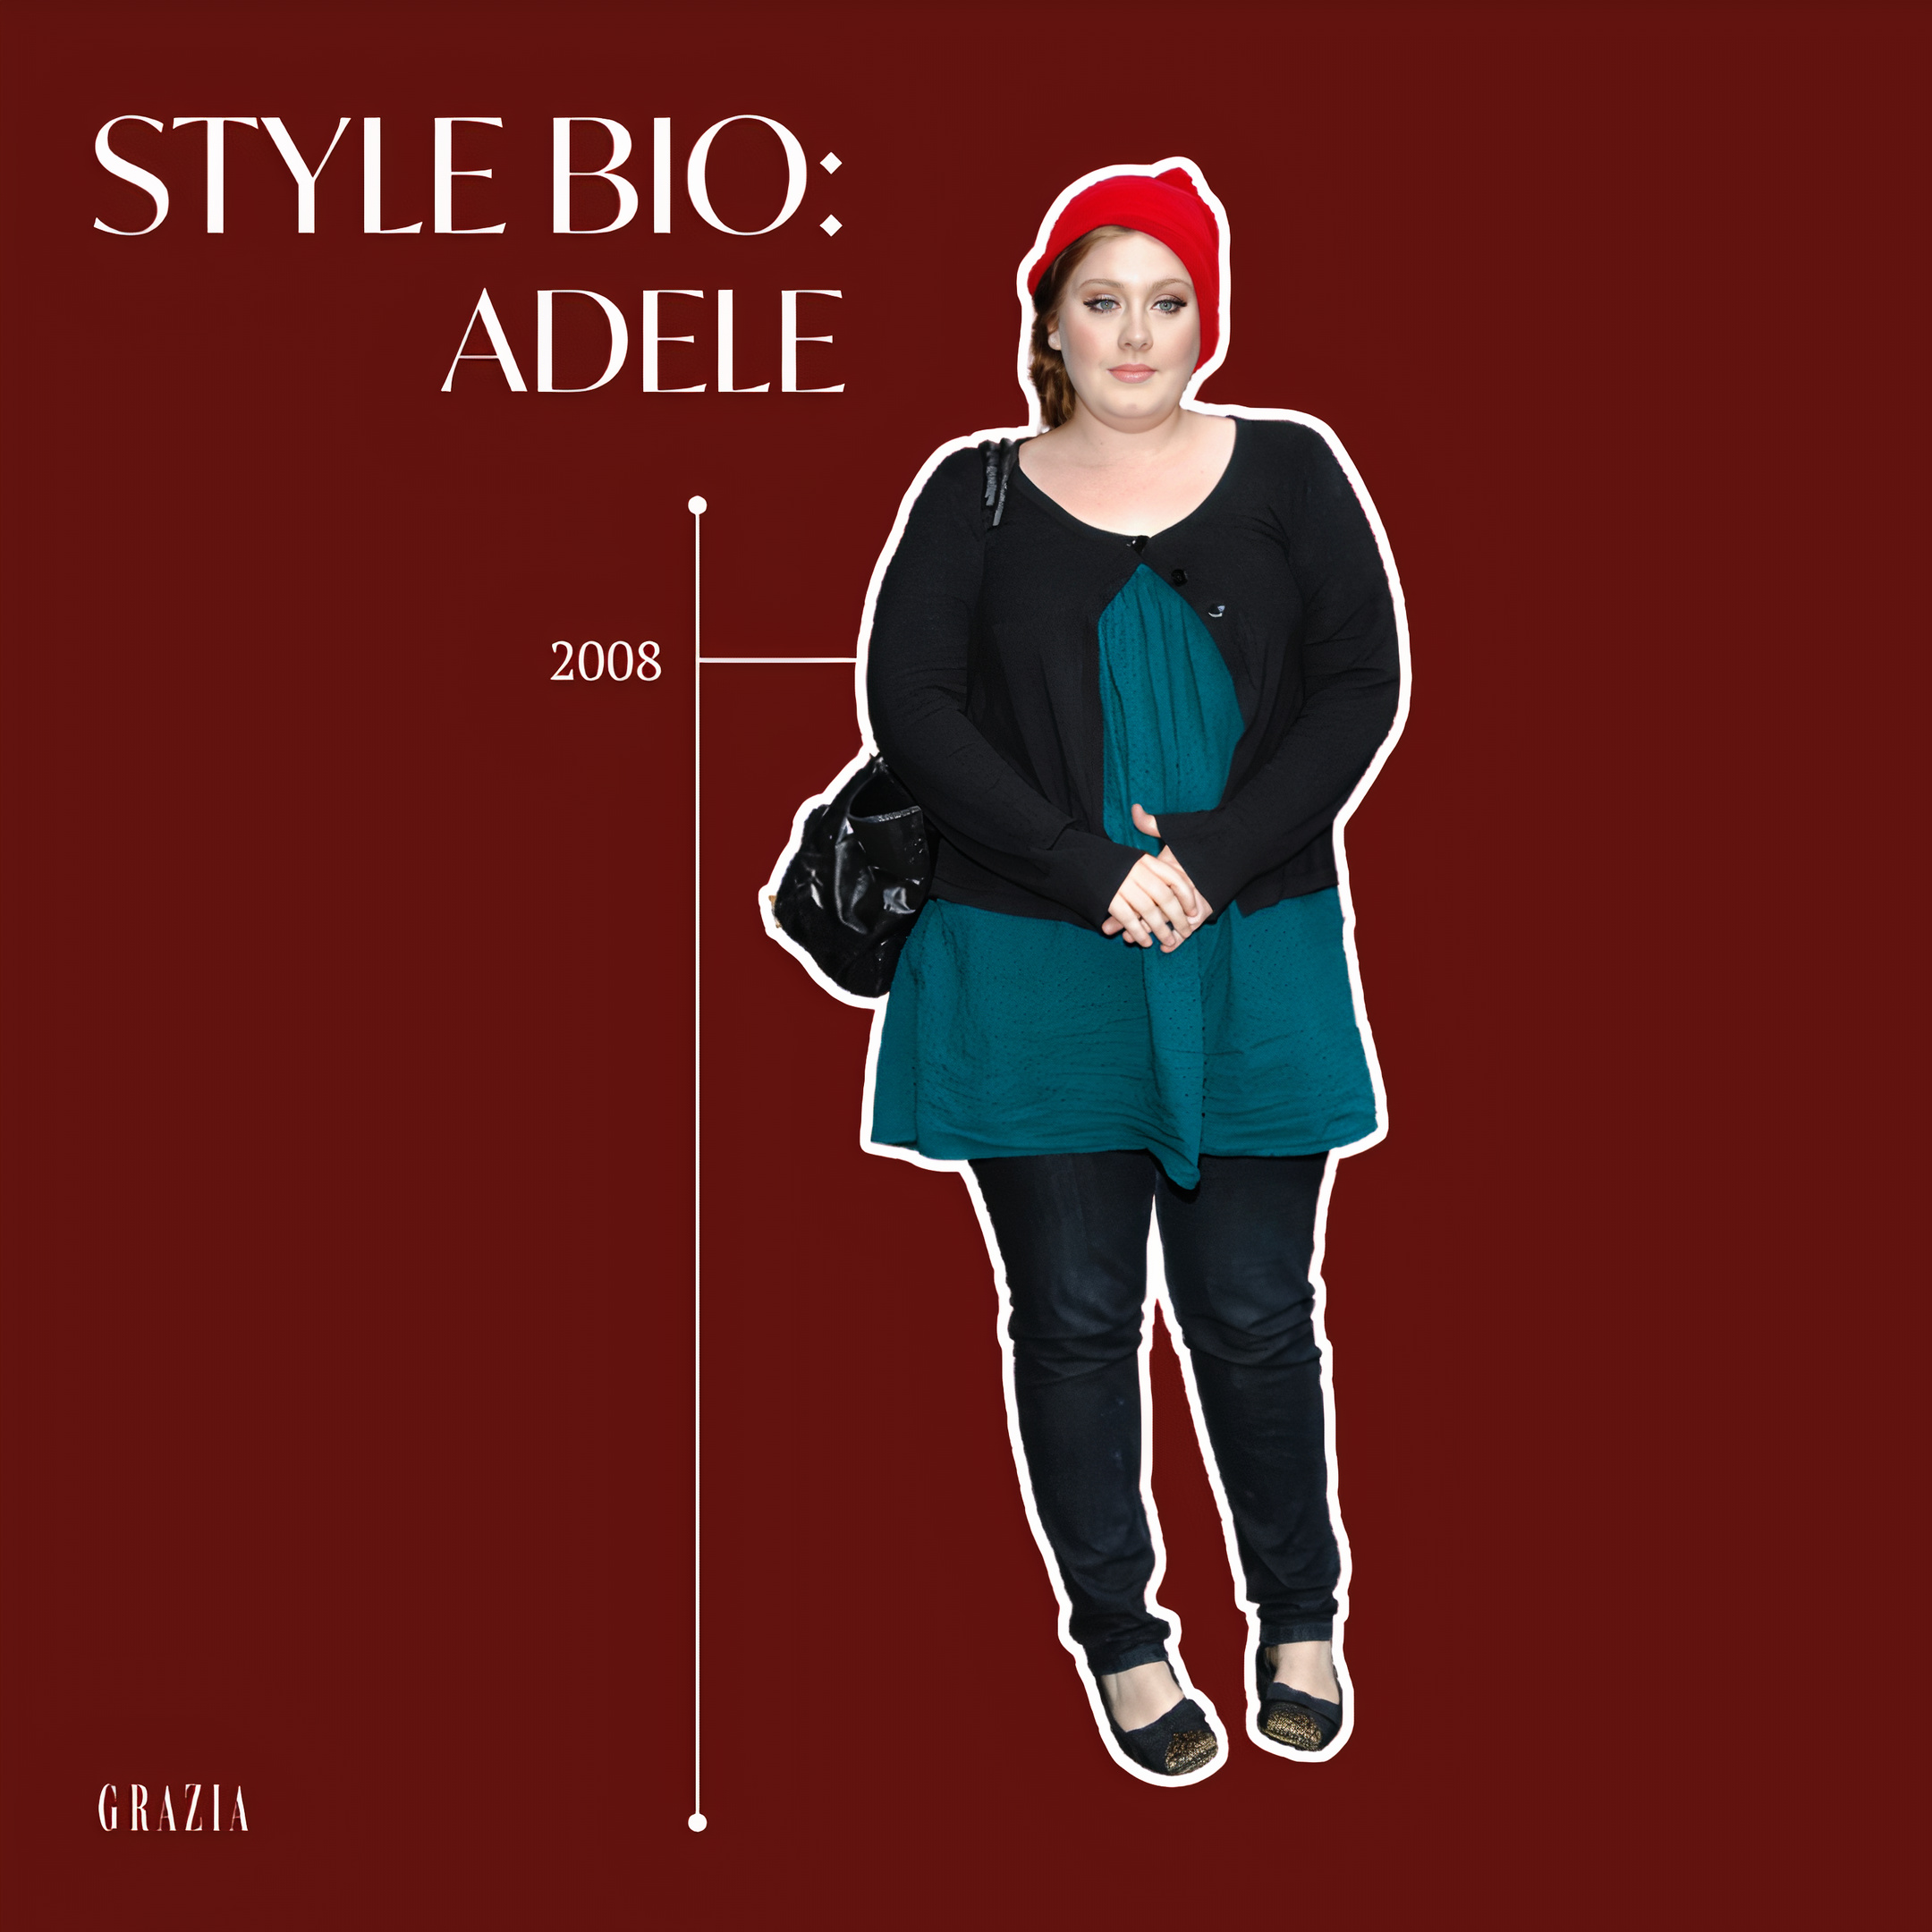 Adele x Style bio